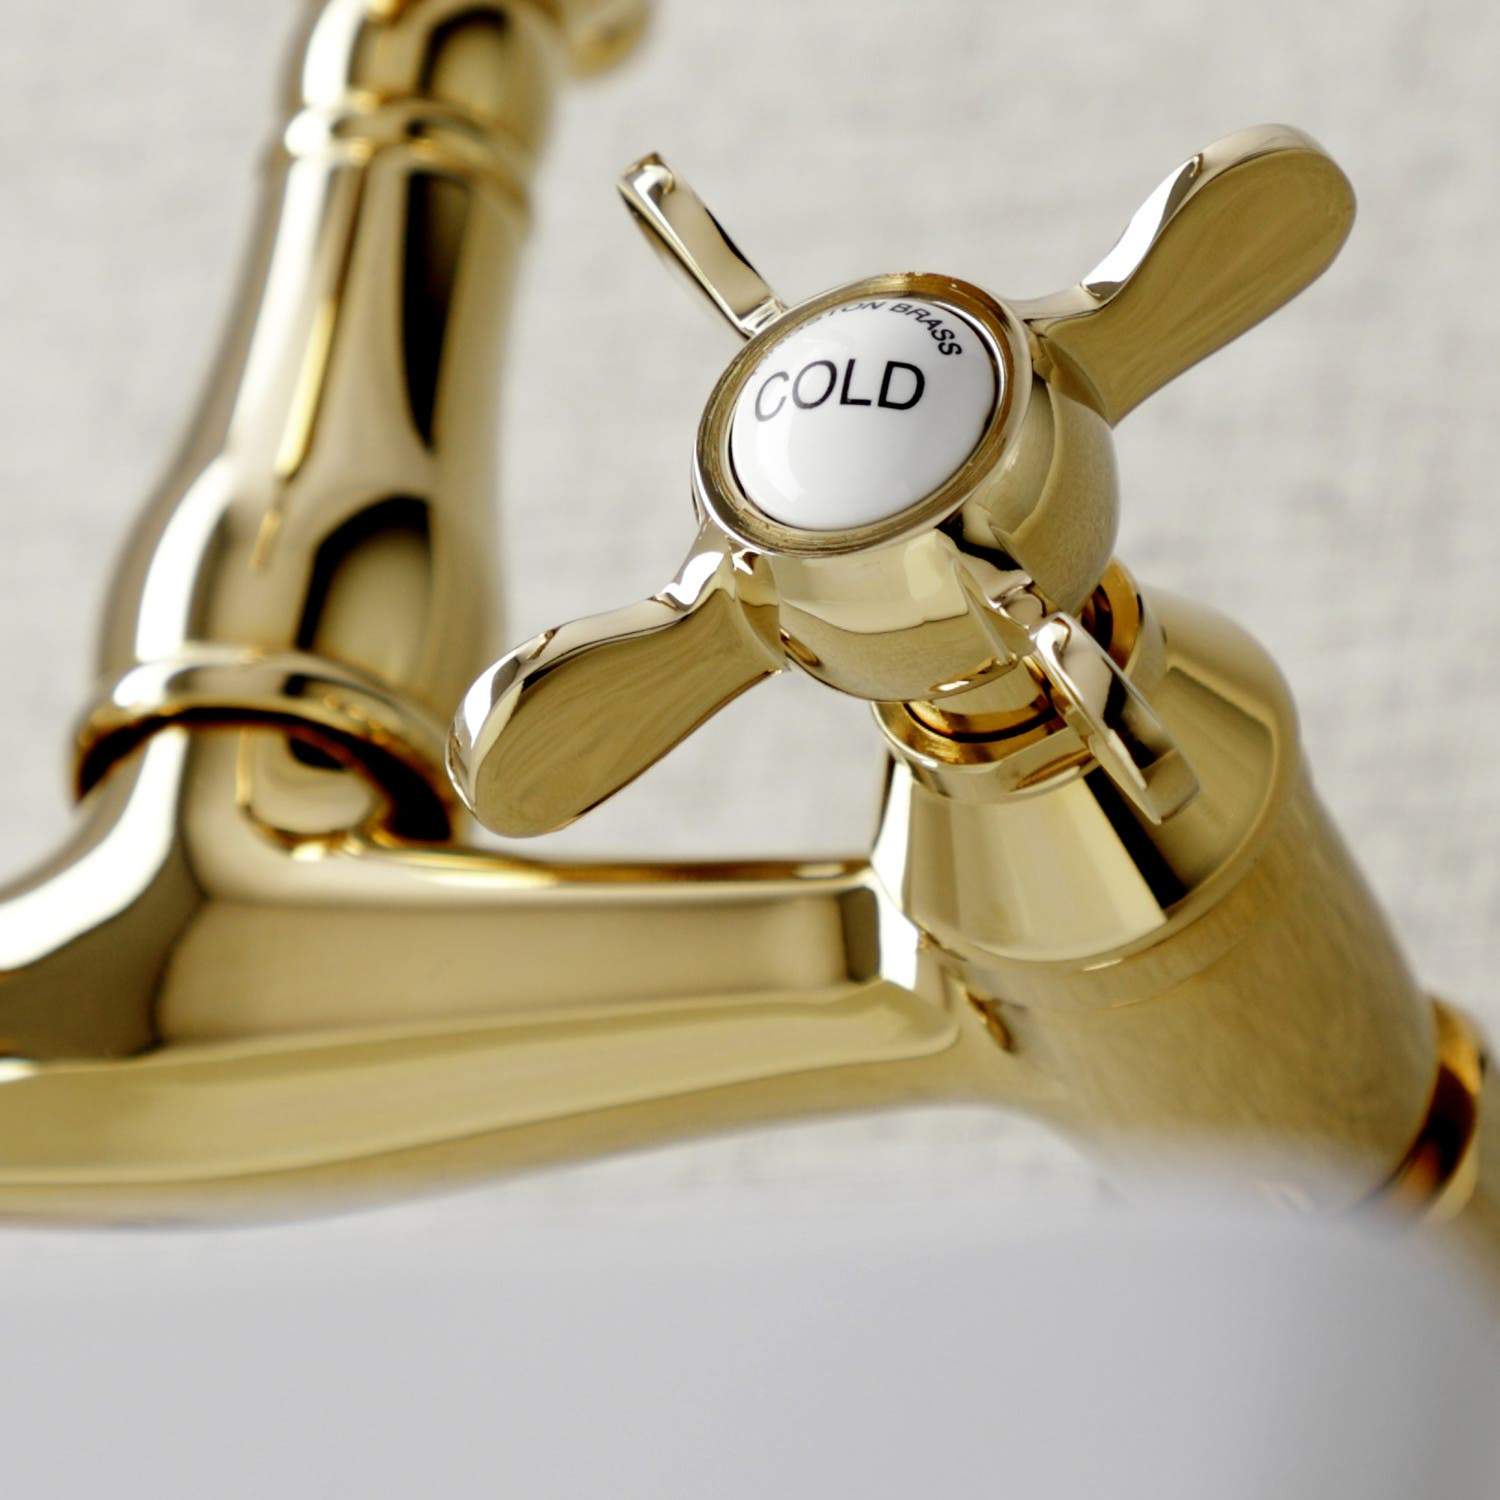 Kingston Brass KS322XBEX-P 6-Inch Adjustable Center Wall Mount Kitchen Faucet